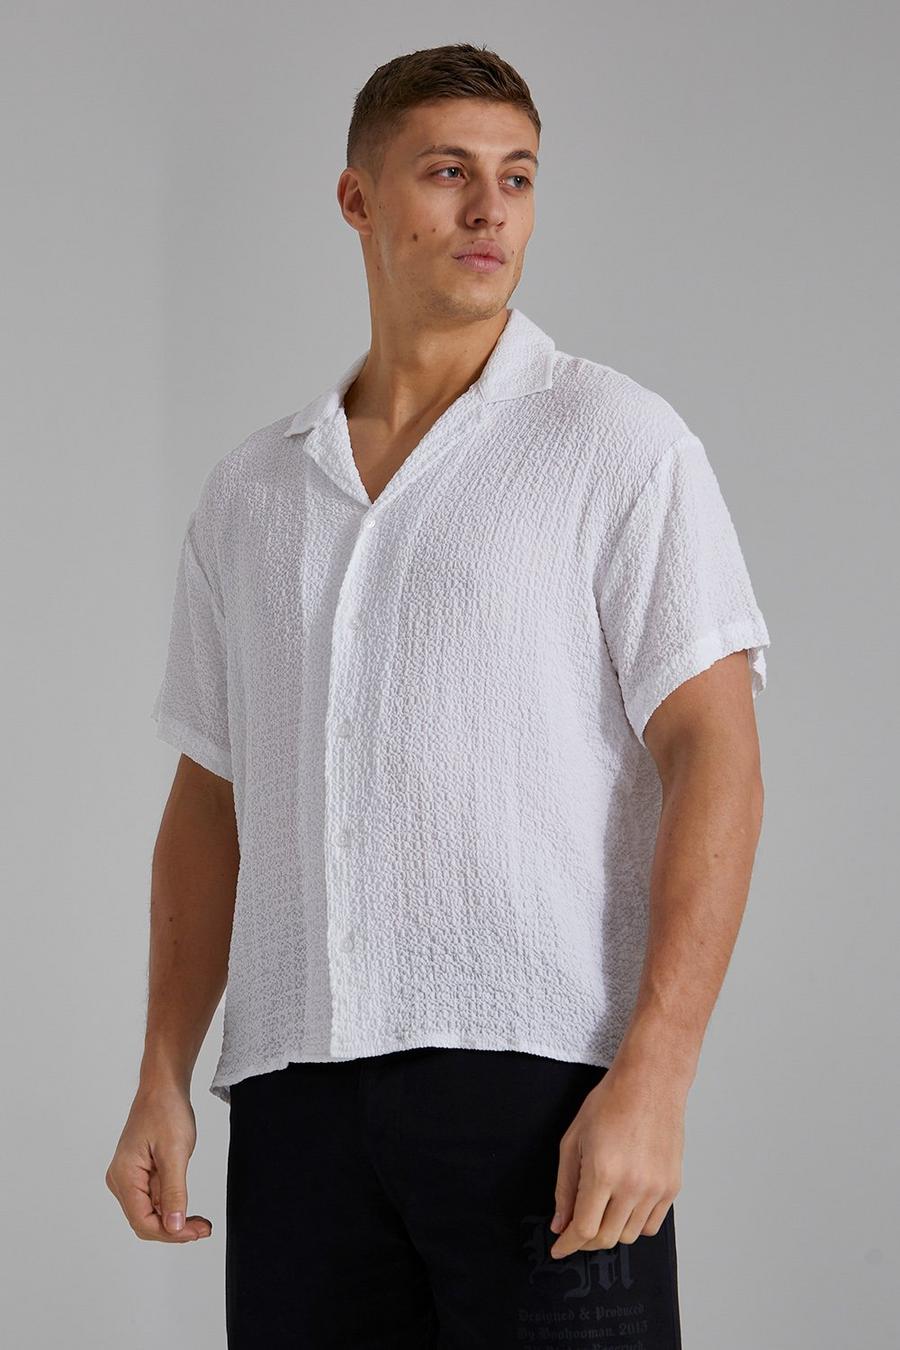 https://media.boohoo.com/i/boohoo/bmm08741_white_xl/male-white-boxy-short-sleeve-extreme-crinkle-shirt/?w=900&qlt=default&fmt.jp2.qlt=70&fmt=auto&sm=fit